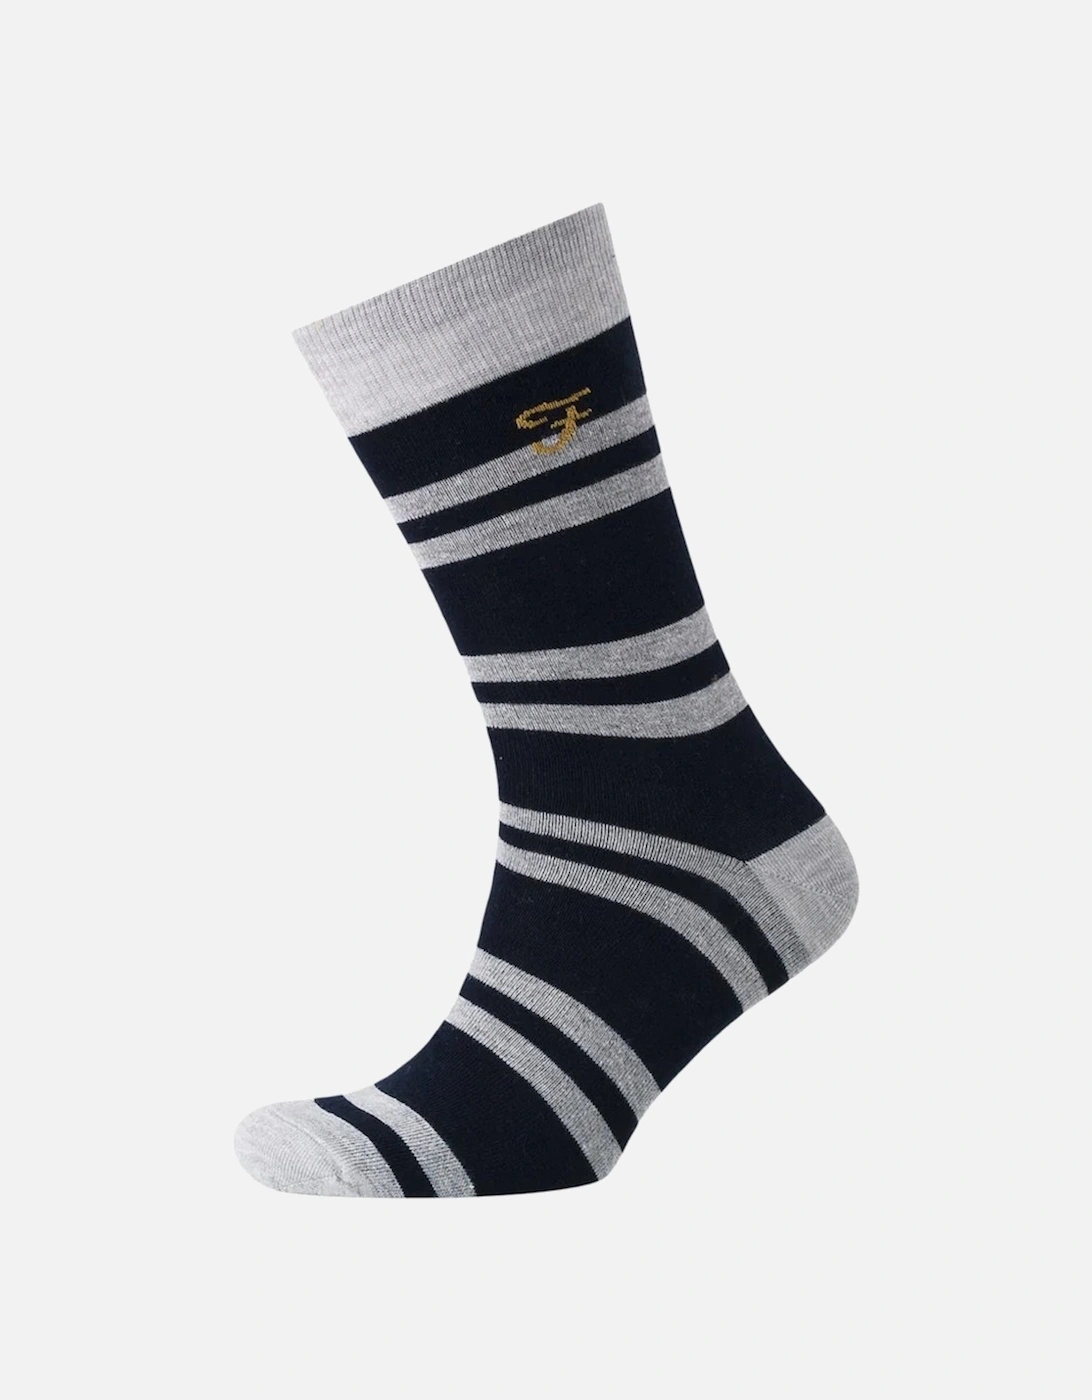 Mens Falton Striped Socks (Pack of 3)